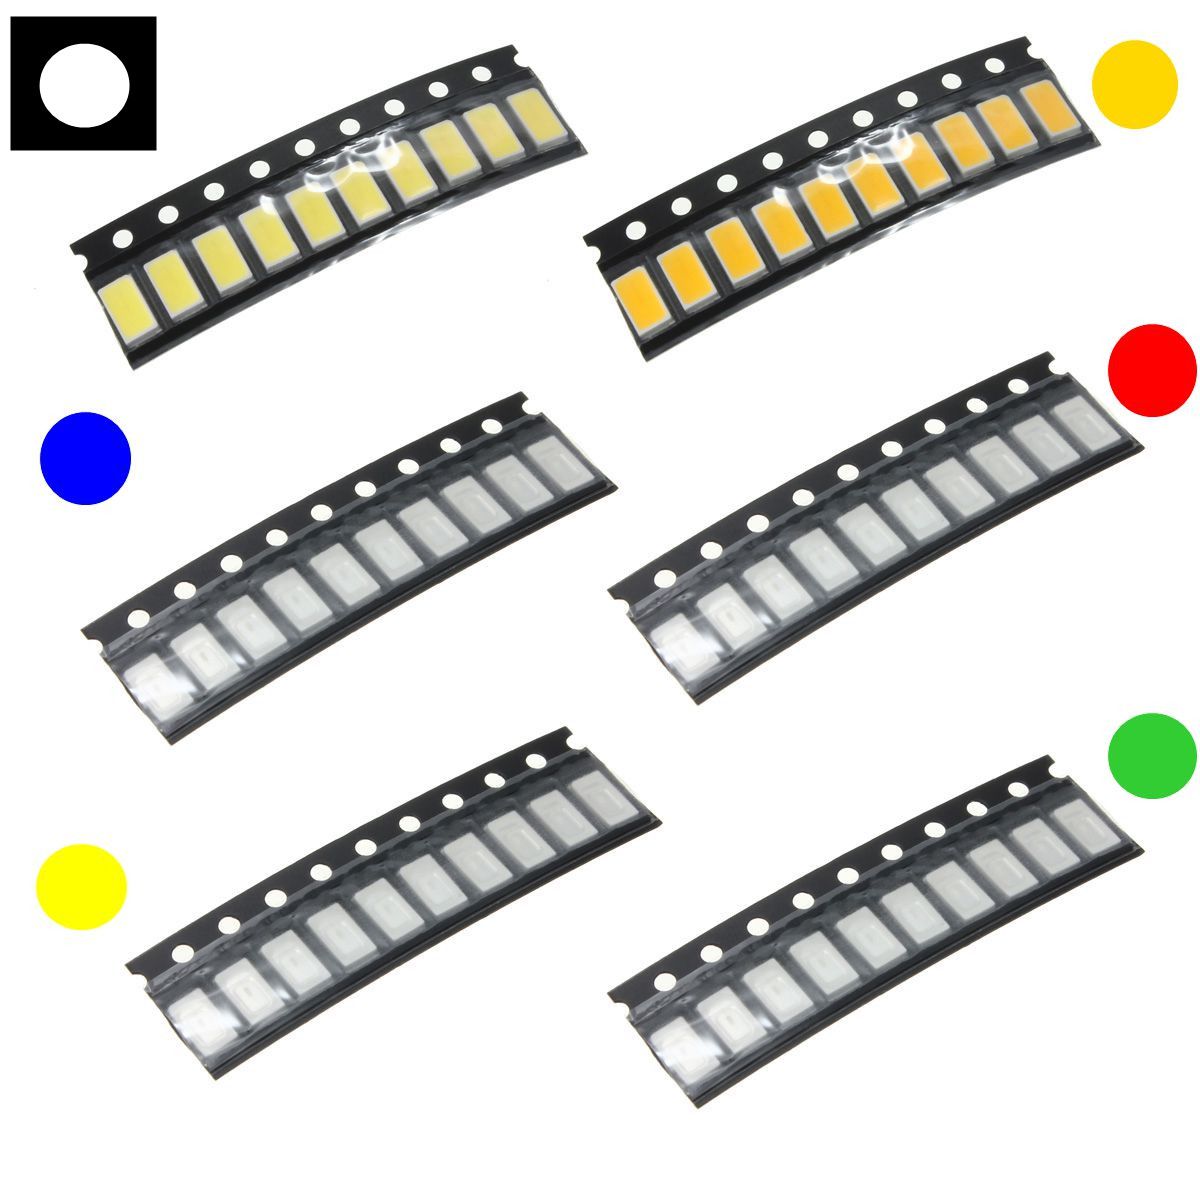 10-pcs-0603-Colorful-SMD-SMT-LED-Light-Lamp-Beads-For-Strip-Lights-30-32V-979332